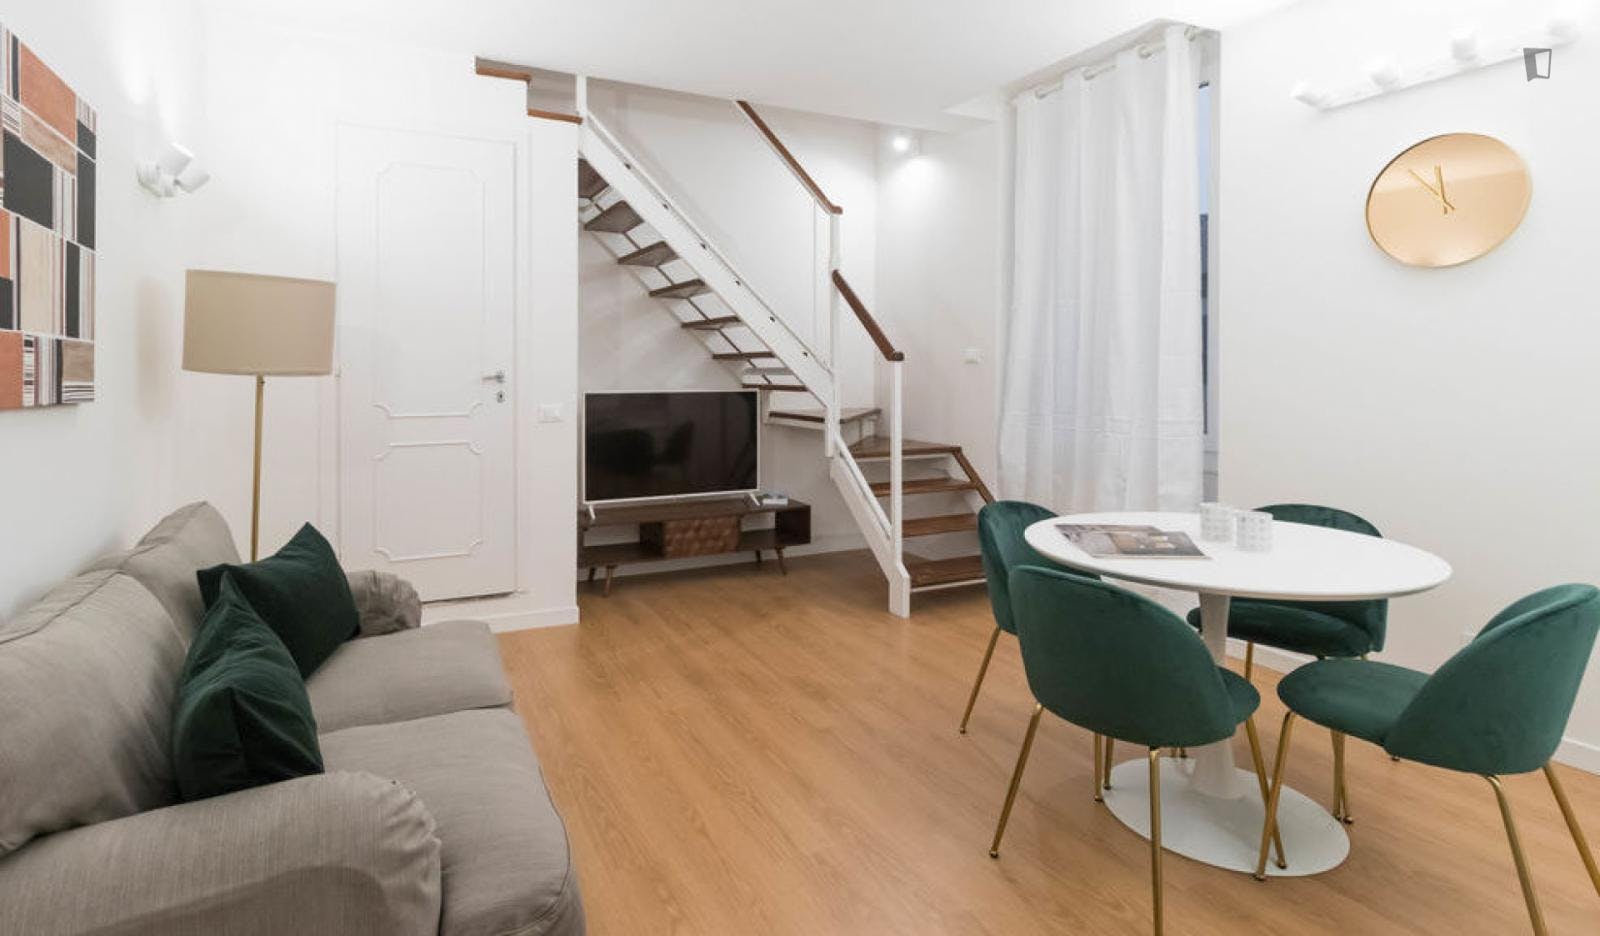 Appealing 2-bedroom apartment in Navigli